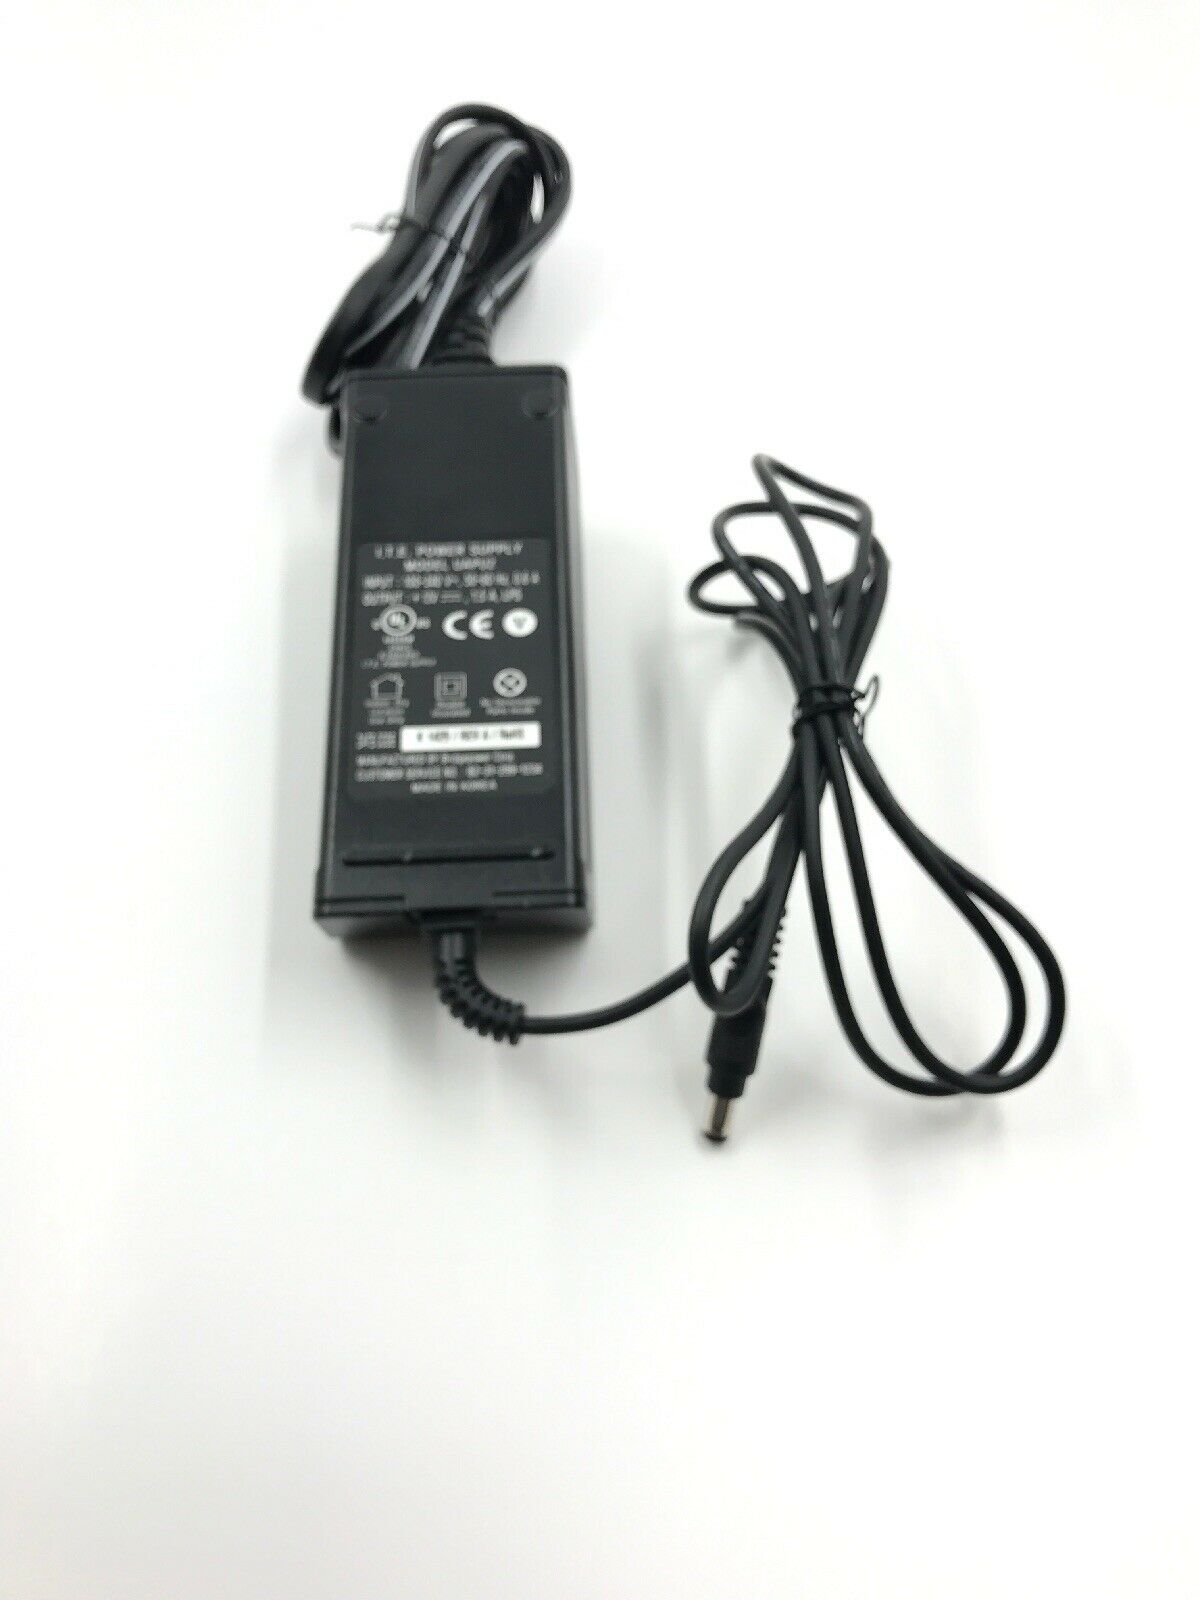 NEW Samsung UAPU2 AC Adapter 12V 1.5A ITE Power Supply